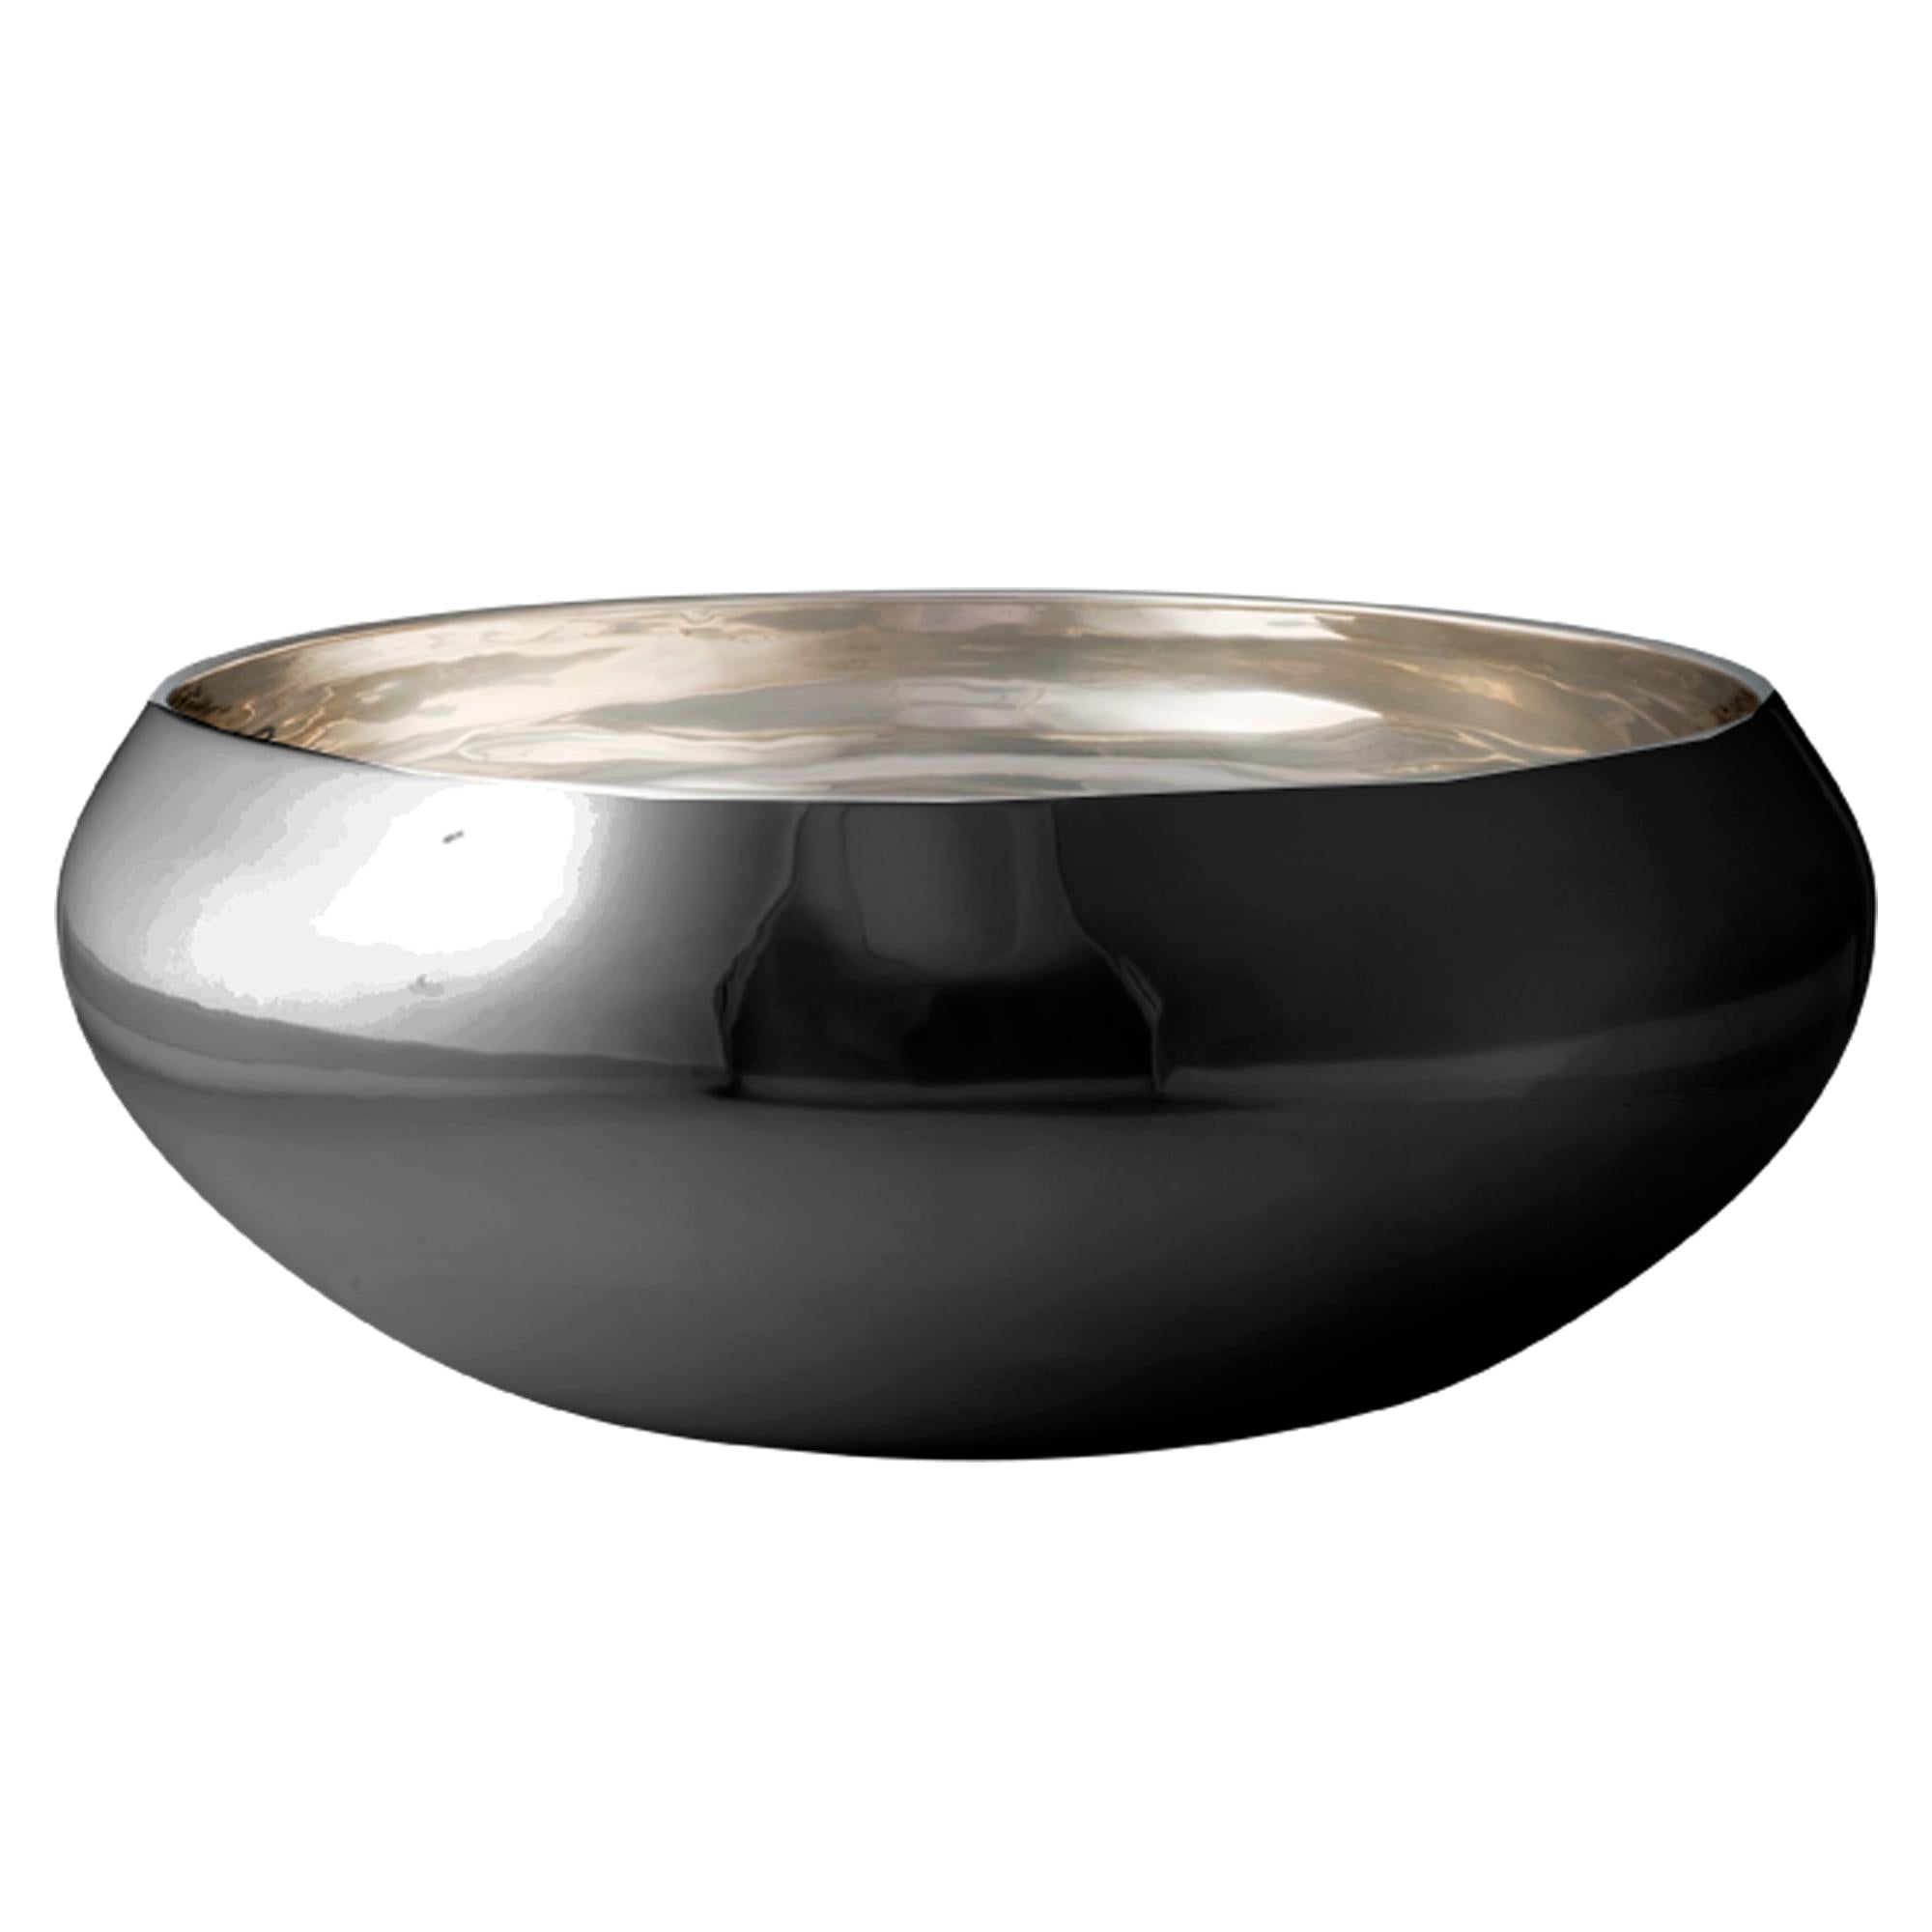 Kay Bojesen Nest Bowl in acciaio nero, grande